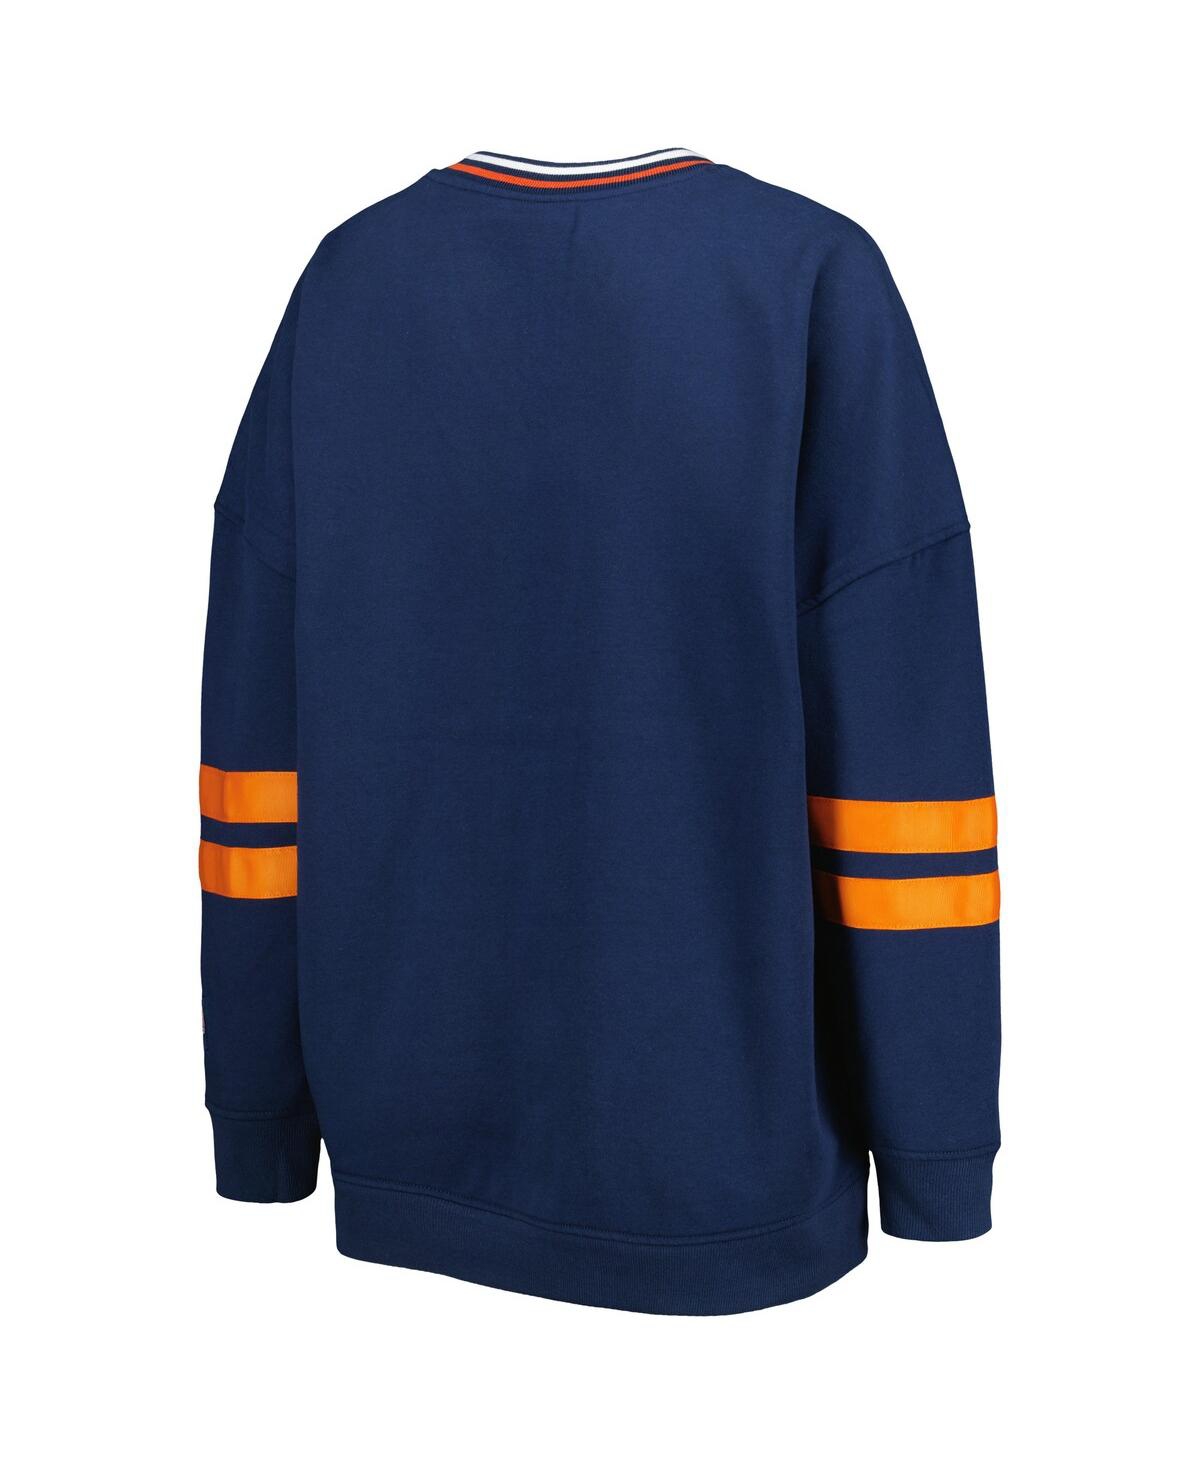 Shop The Wild Collective Women's  Navy Denver Broncos Vintage-like Pullover V-neck Sweatshirt